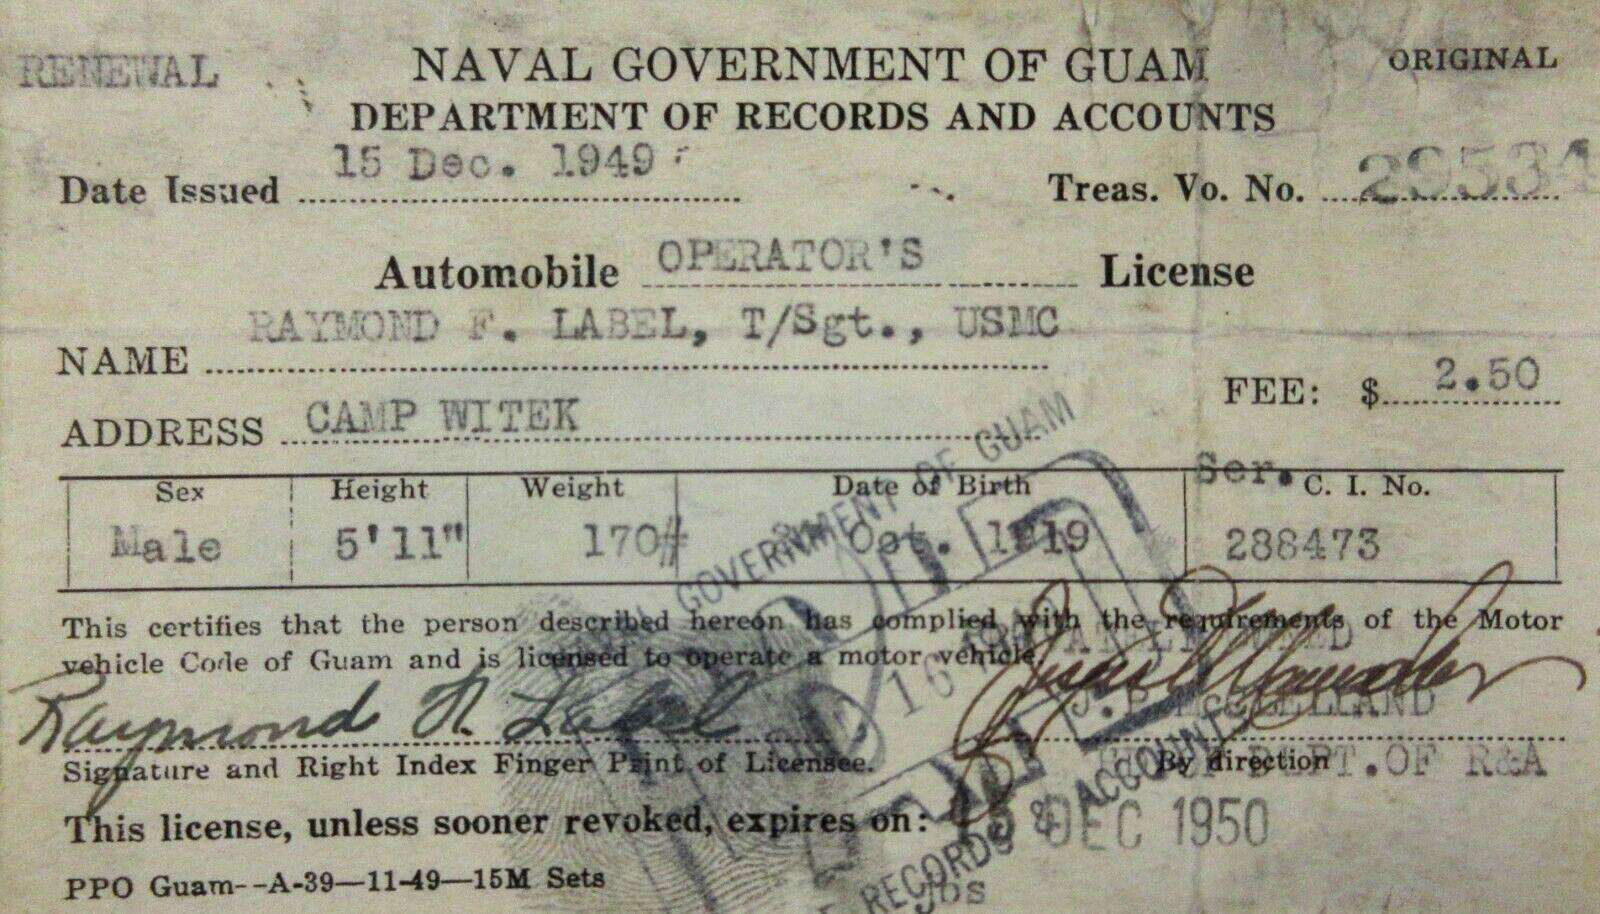 Camp Witek US Navy USMC Driver\'s License Naval Government of Guam 1949